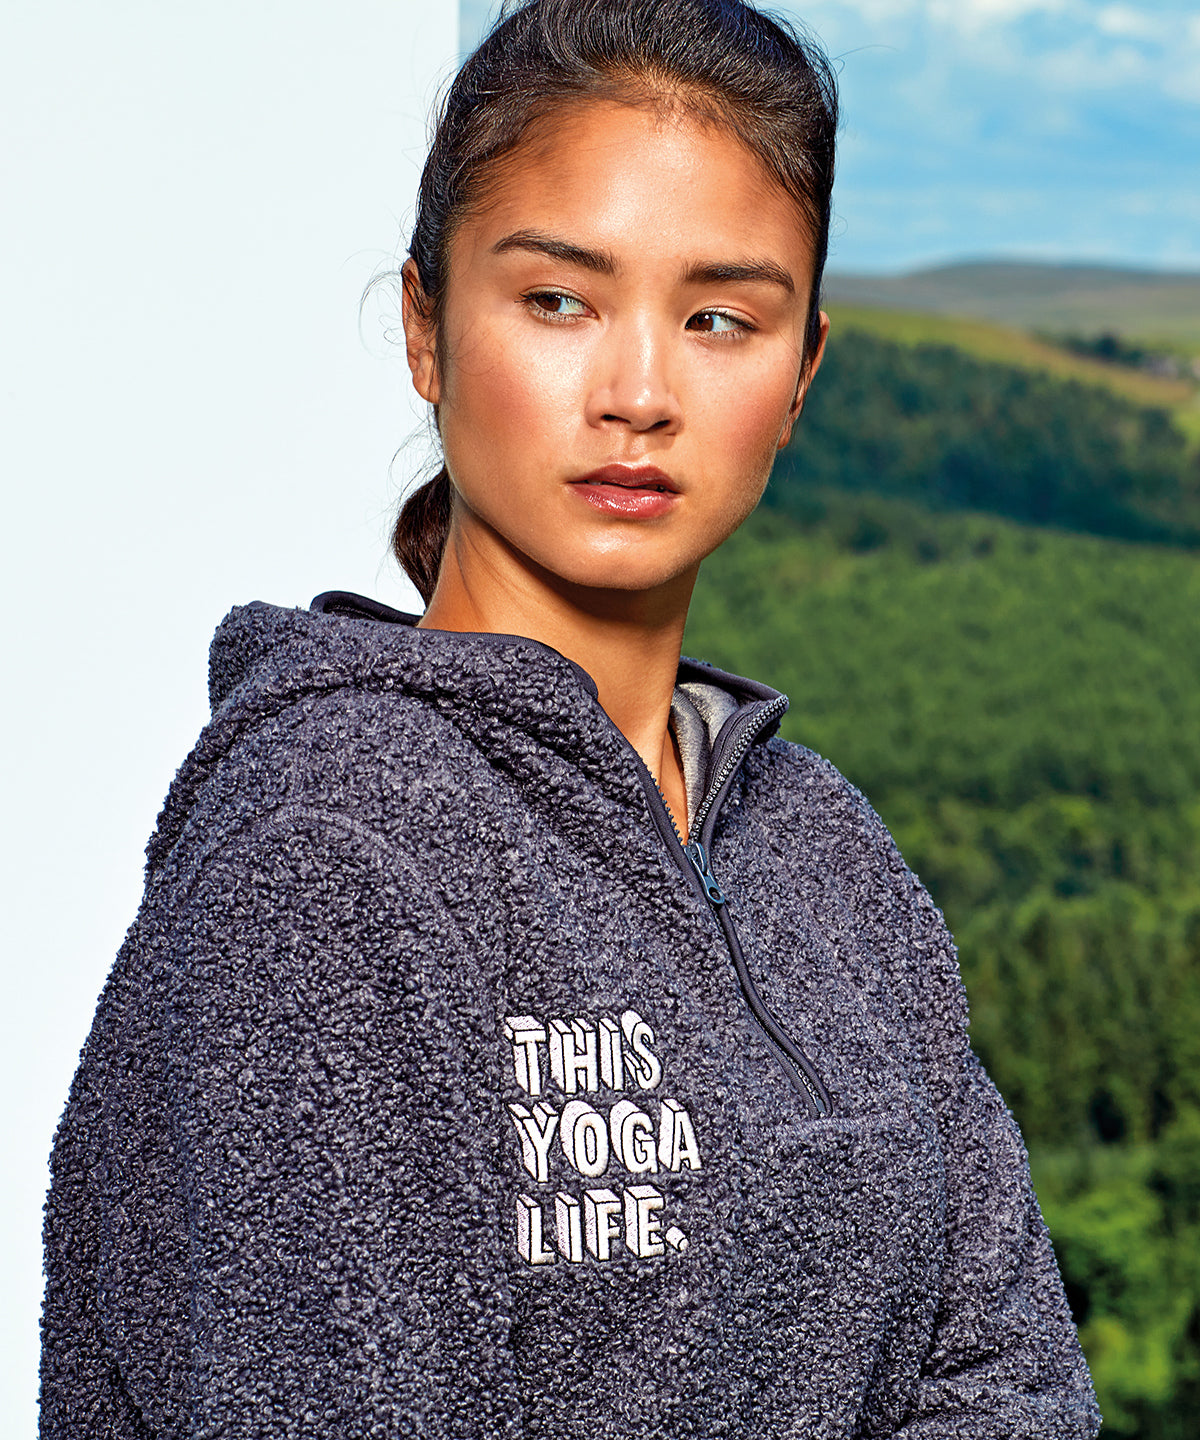 Women's TriDri® sherpa 1/4 zip hoodie